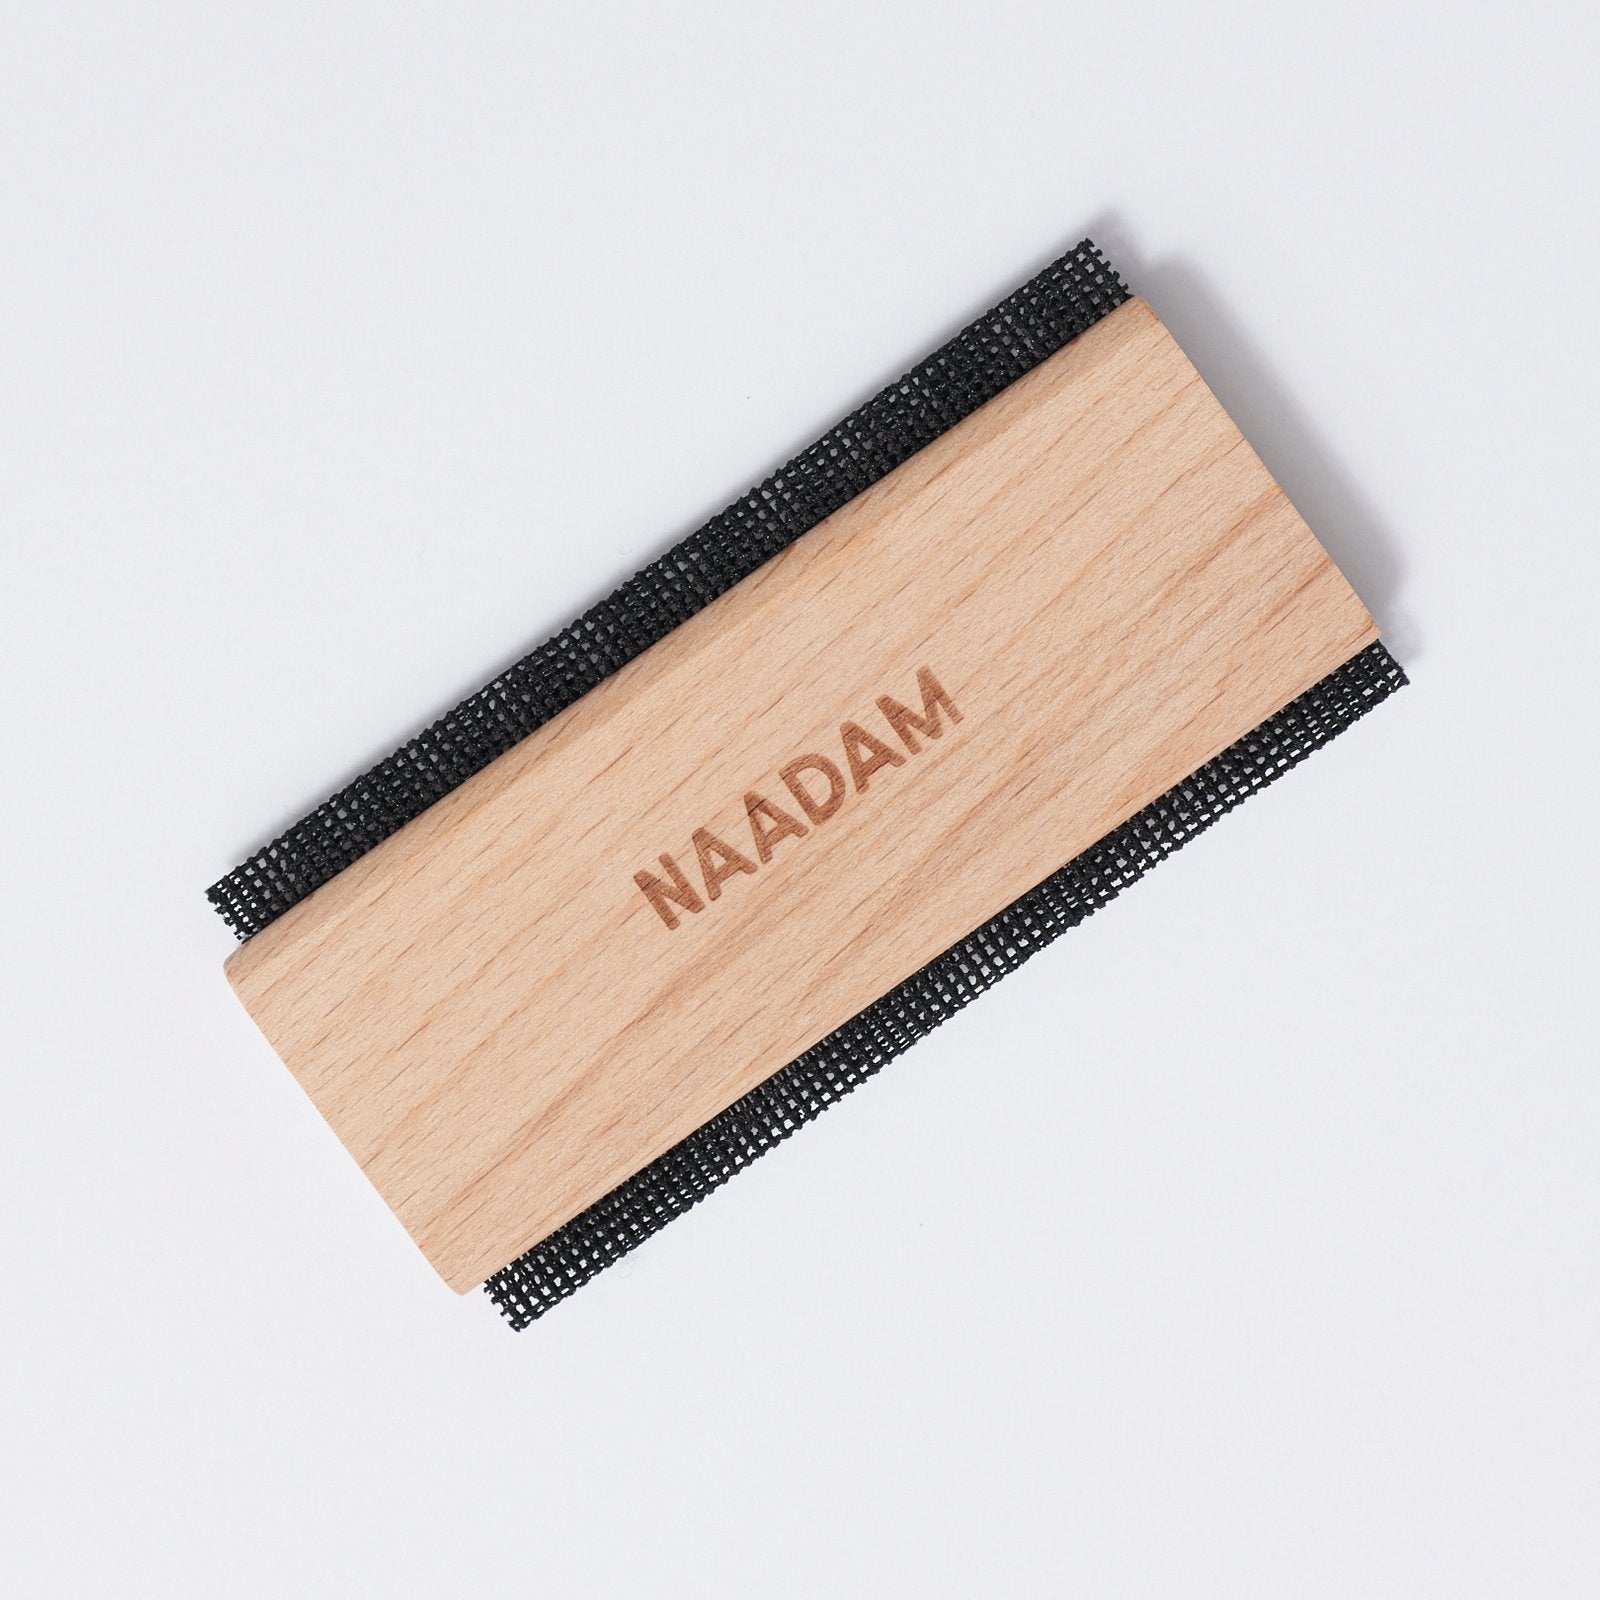 Naadam Cashmere Comb in Natural Wood, 4 x 10